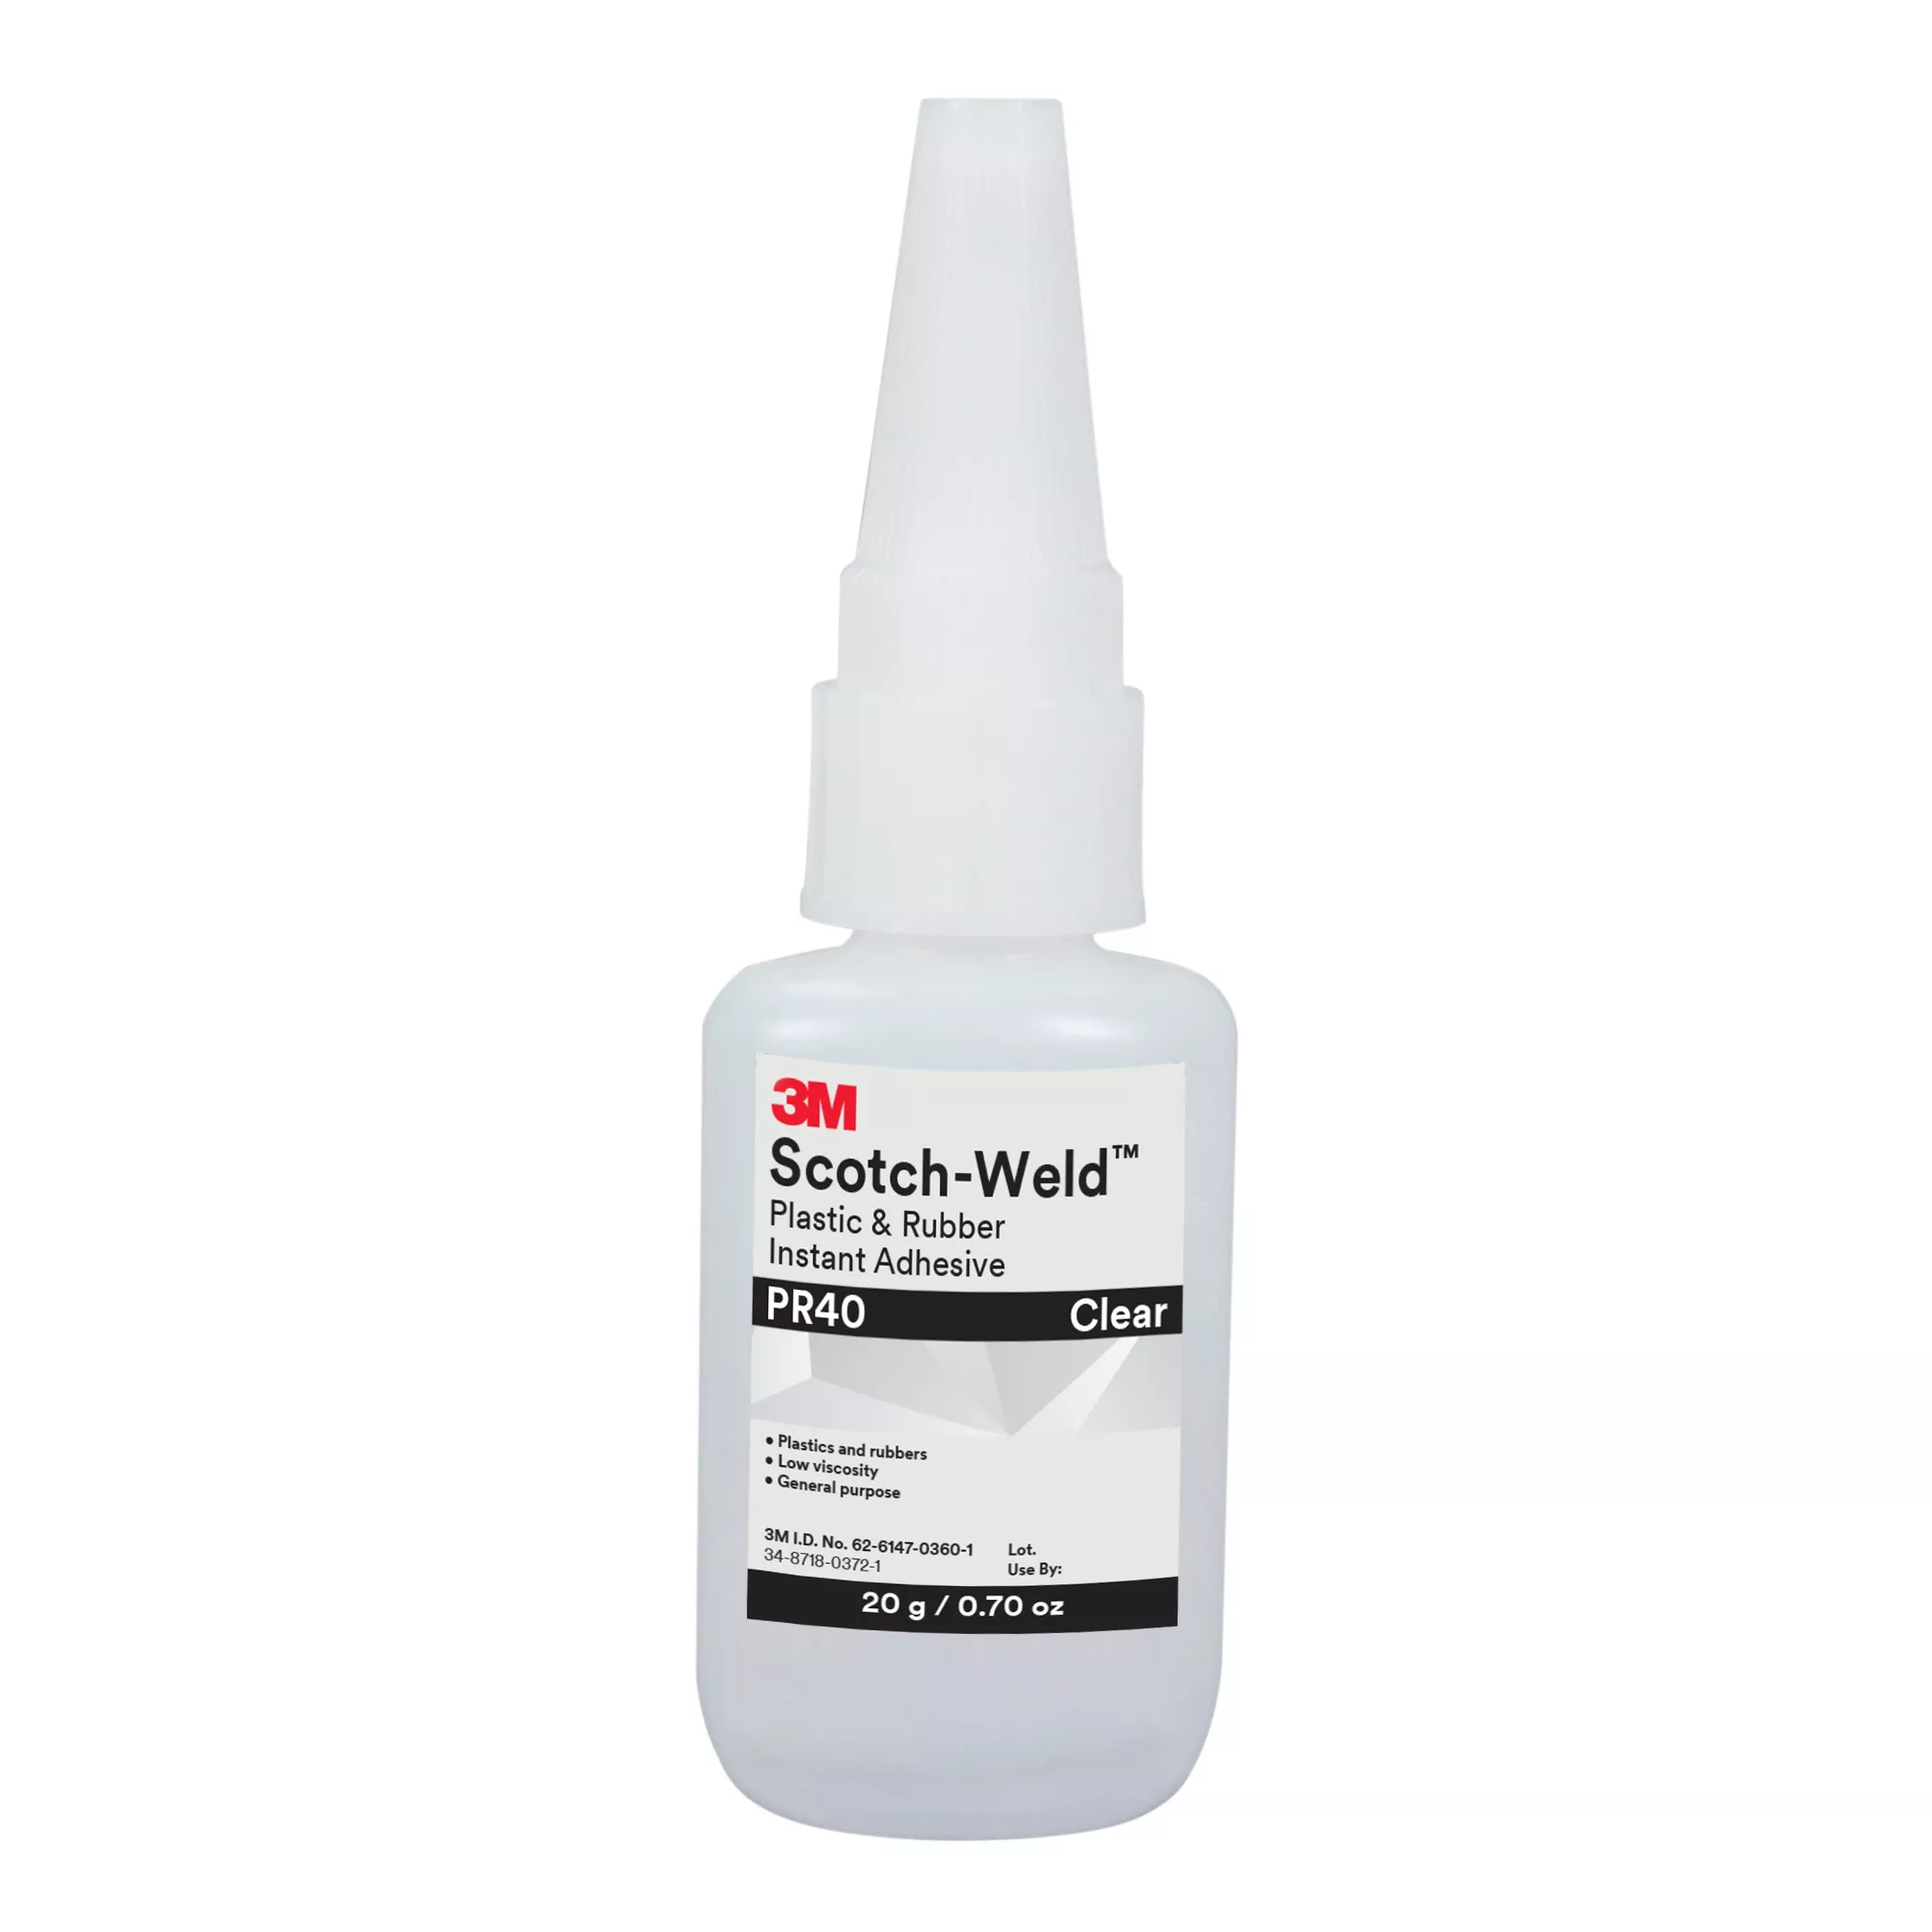 3M™ Scotch-Weld™ Plastic & Rubber Instant Adhesive PR40, Clear, 20 Gram,
10 Bottles/Case